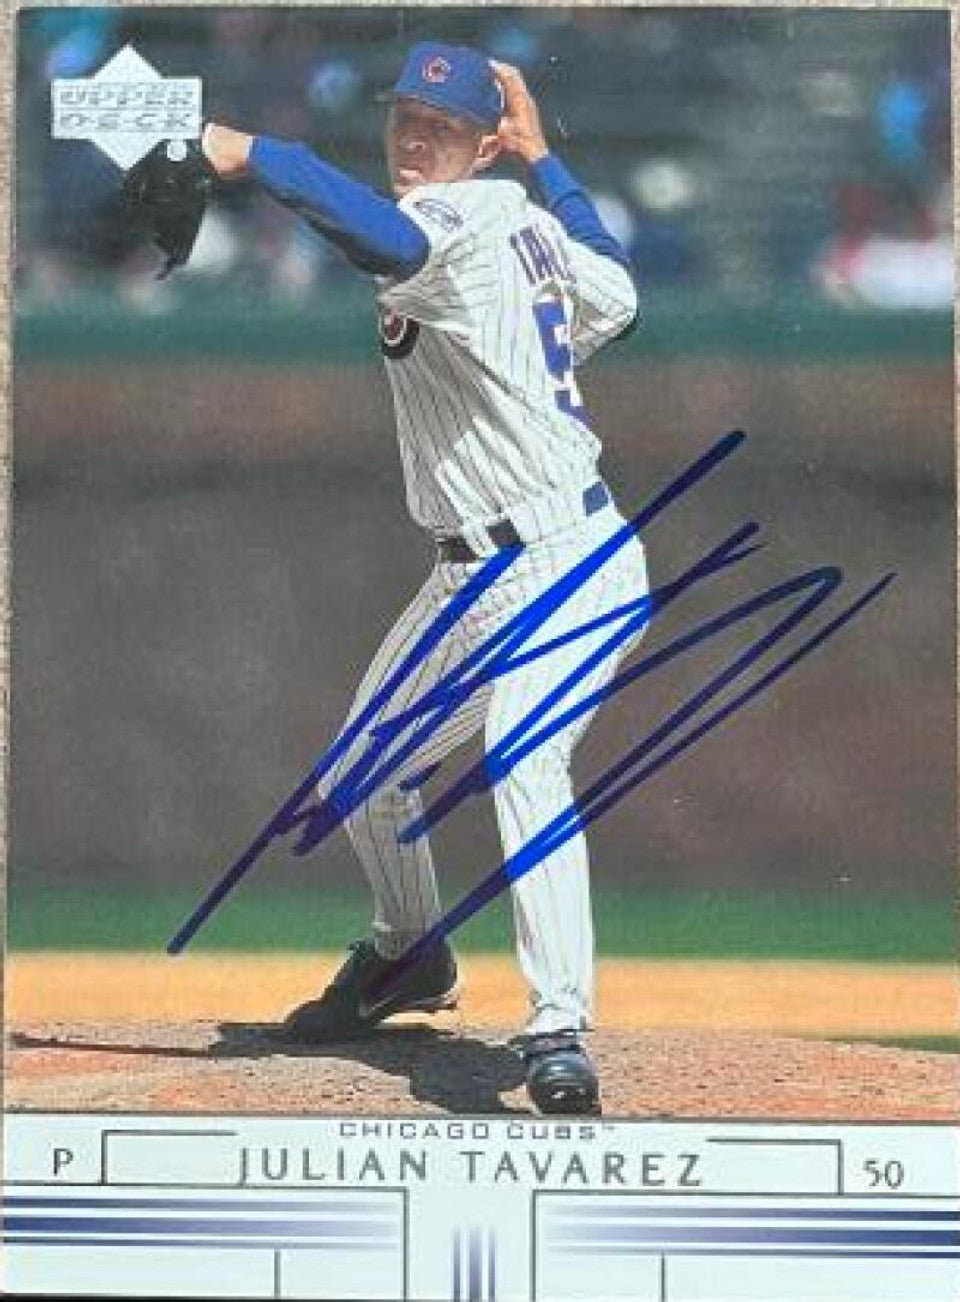 Julian Tavarez Signed 2002 Upper Deck Baseball Card - Cleveland Indians